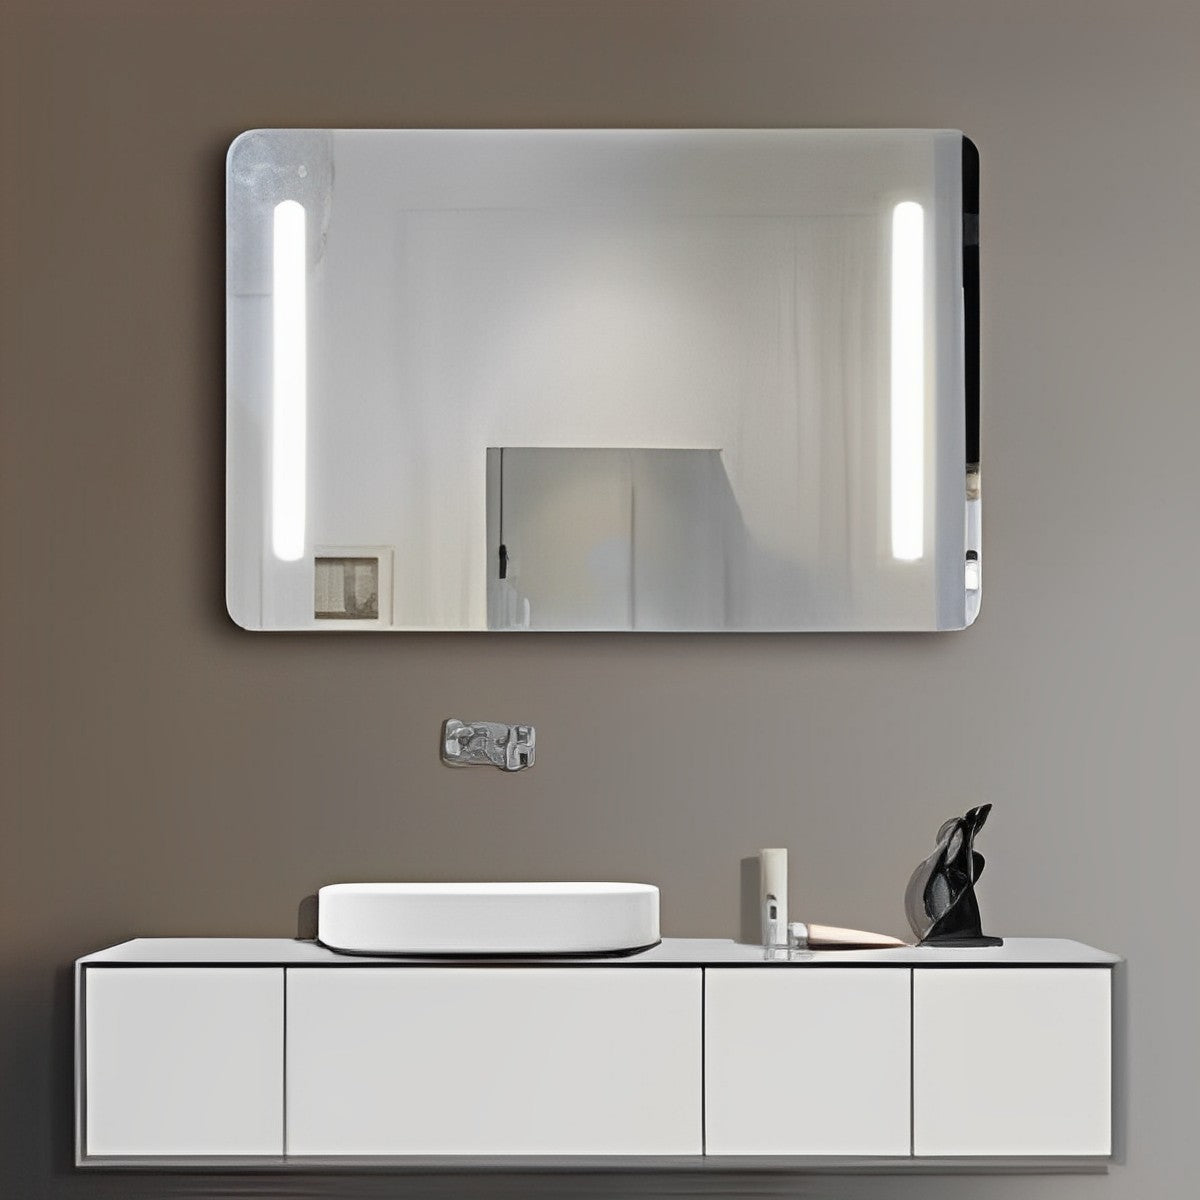 52" Horizontal Hanging Mirror with LED Light MSL-104 - RenoShop